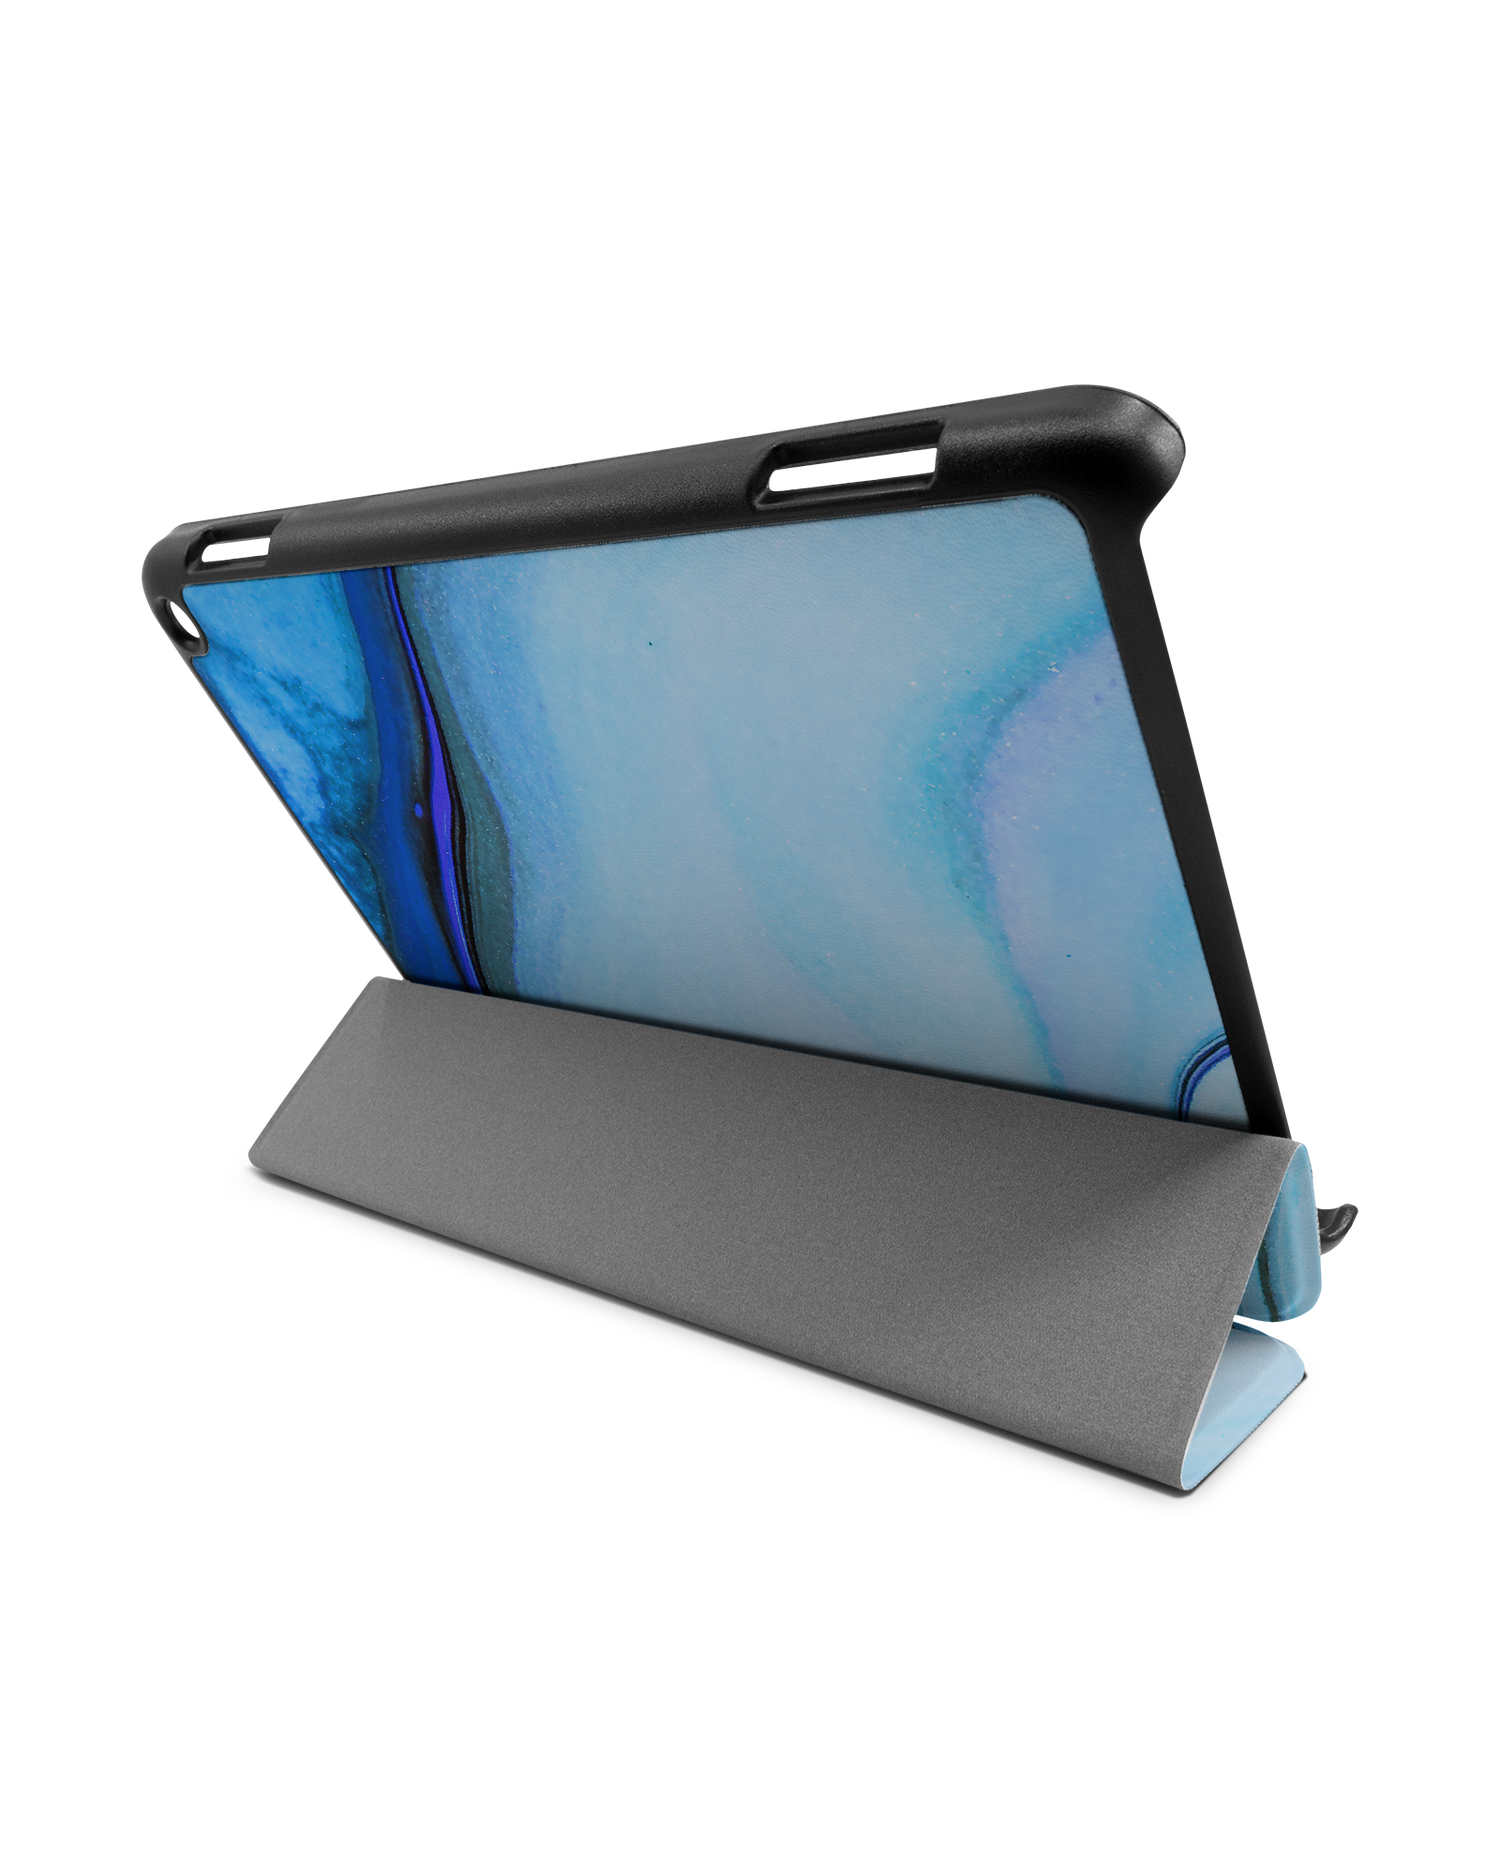 Cool Blues Tablet Smart Case für Amazon Fire HD 8 (2022), Amazon Fire HD 8 Plus (2022), Amazon Fire HD 8 (2020), Amazon Fire HD 8 Plus (2020): Aufgestellt im Querformat